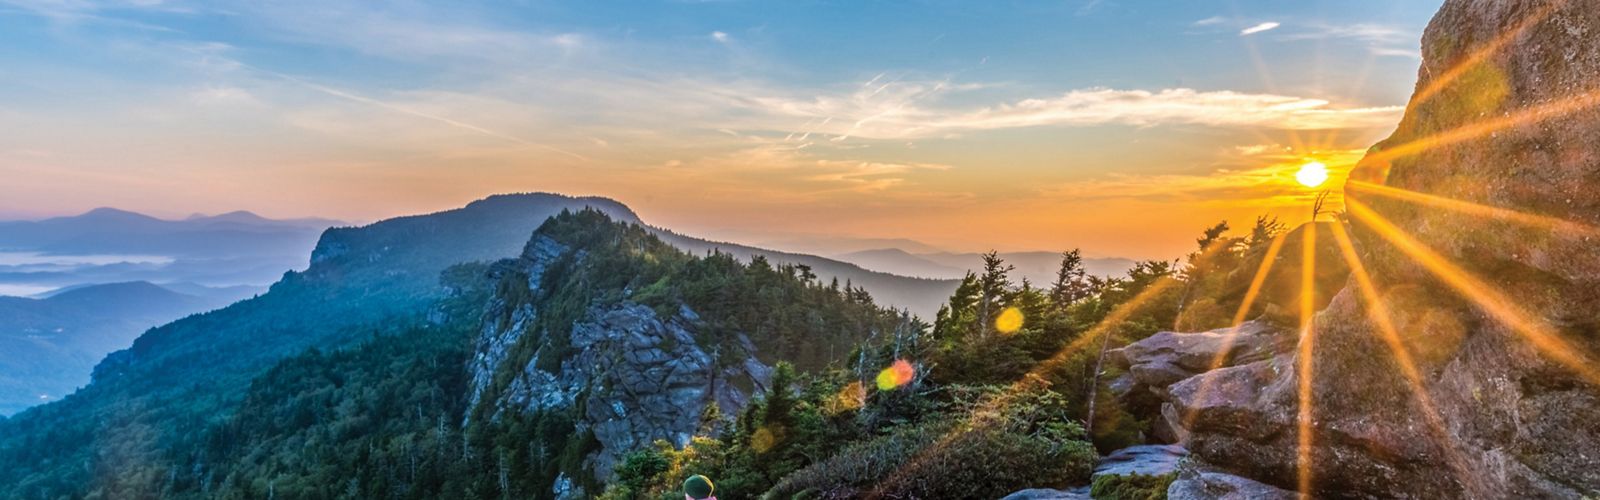 Sunrise at Grandfather Mountain, North Carolina